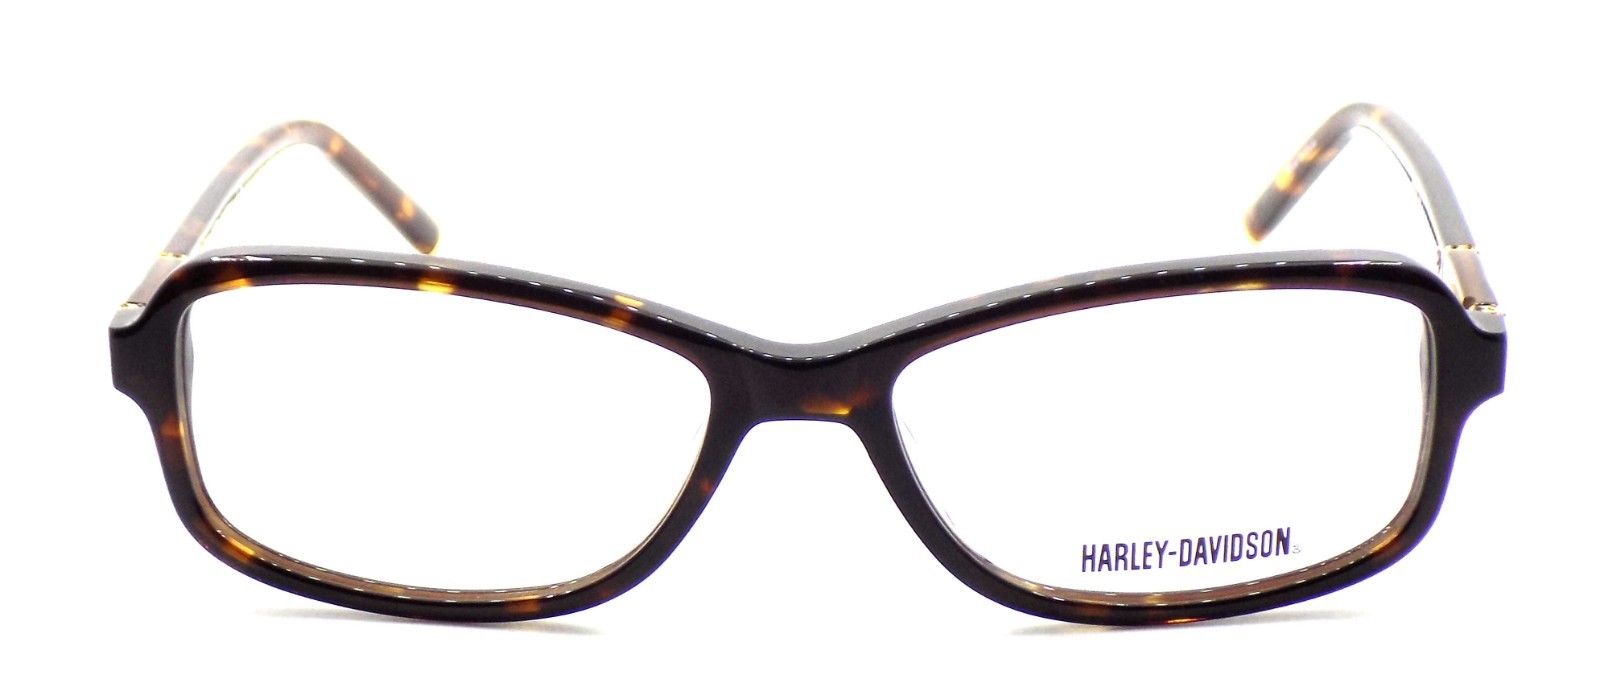 2-Harley Davidson HD0537 052 Women's Eyeglasses Frames 54-16-135 Dark Havana +Case-664689889143-IKSpecs